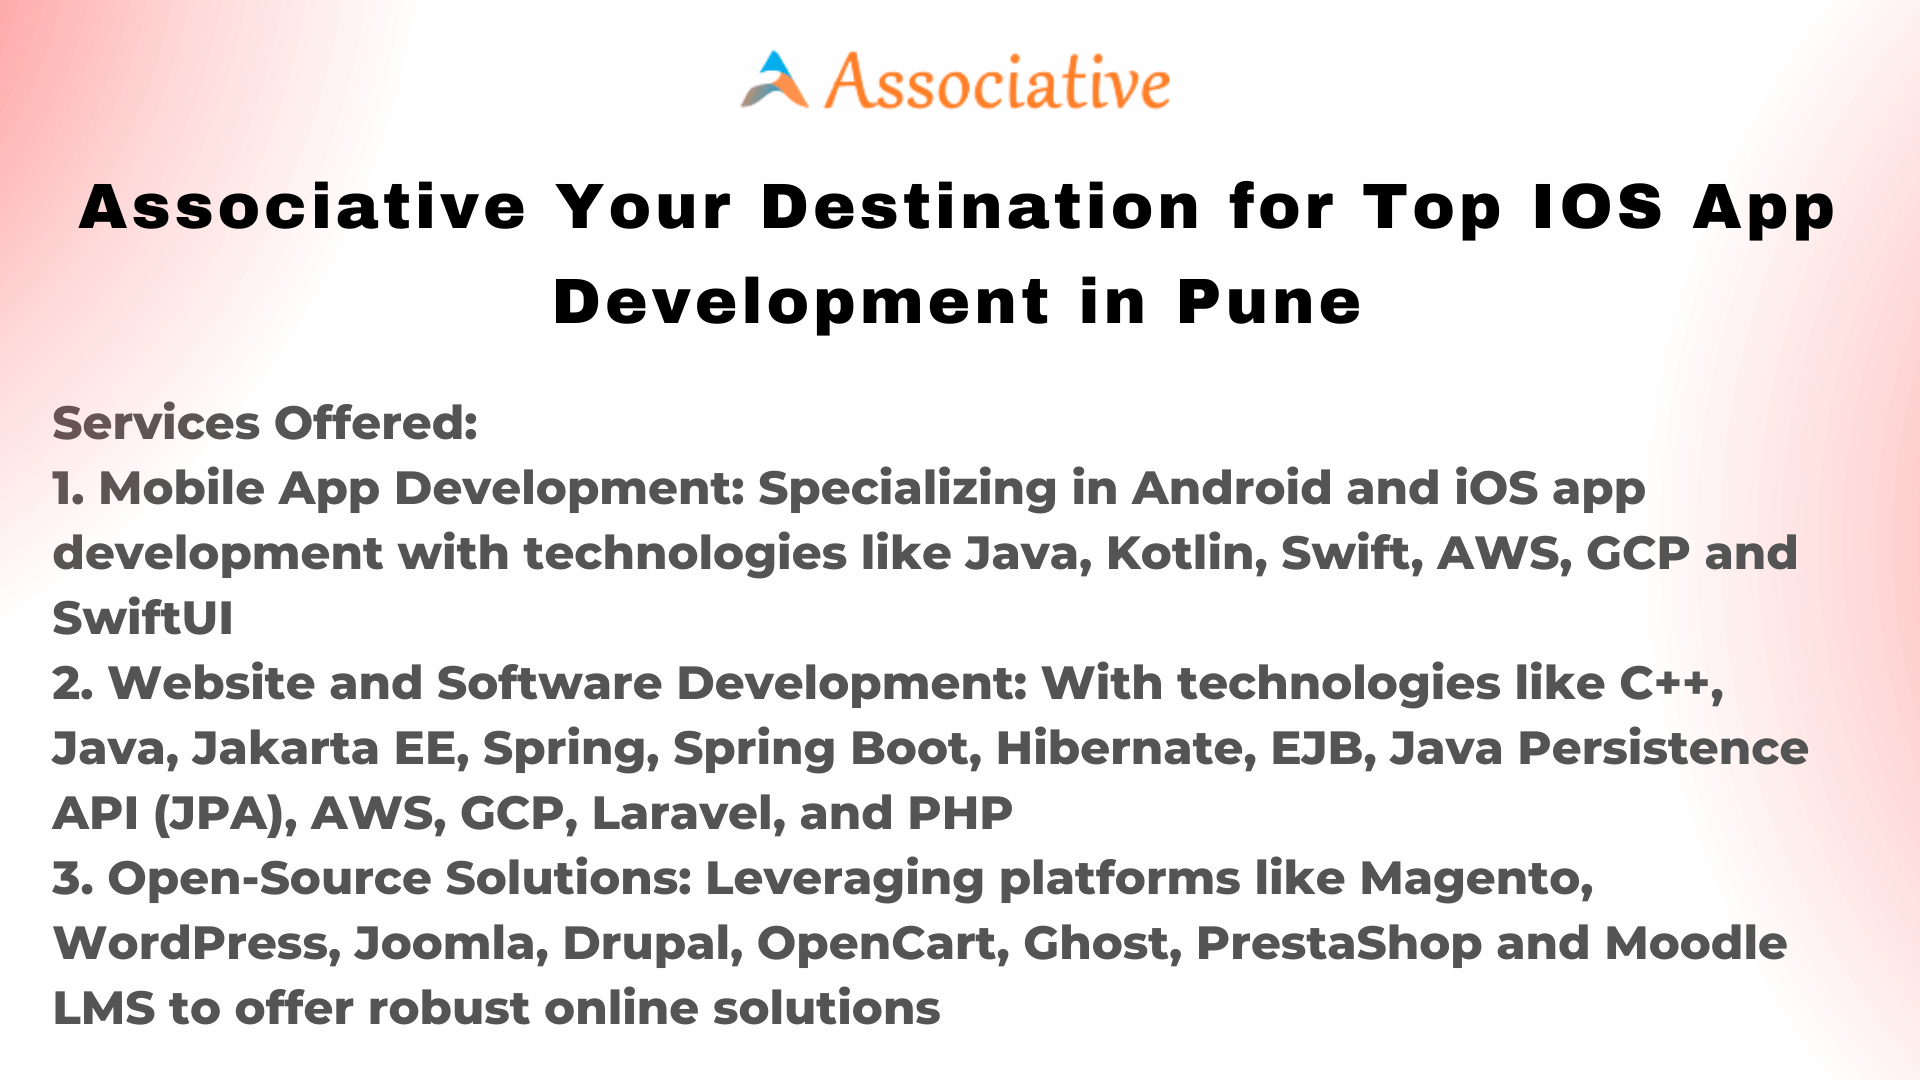 Associative Your Destination for Top IOS App Development in Pune